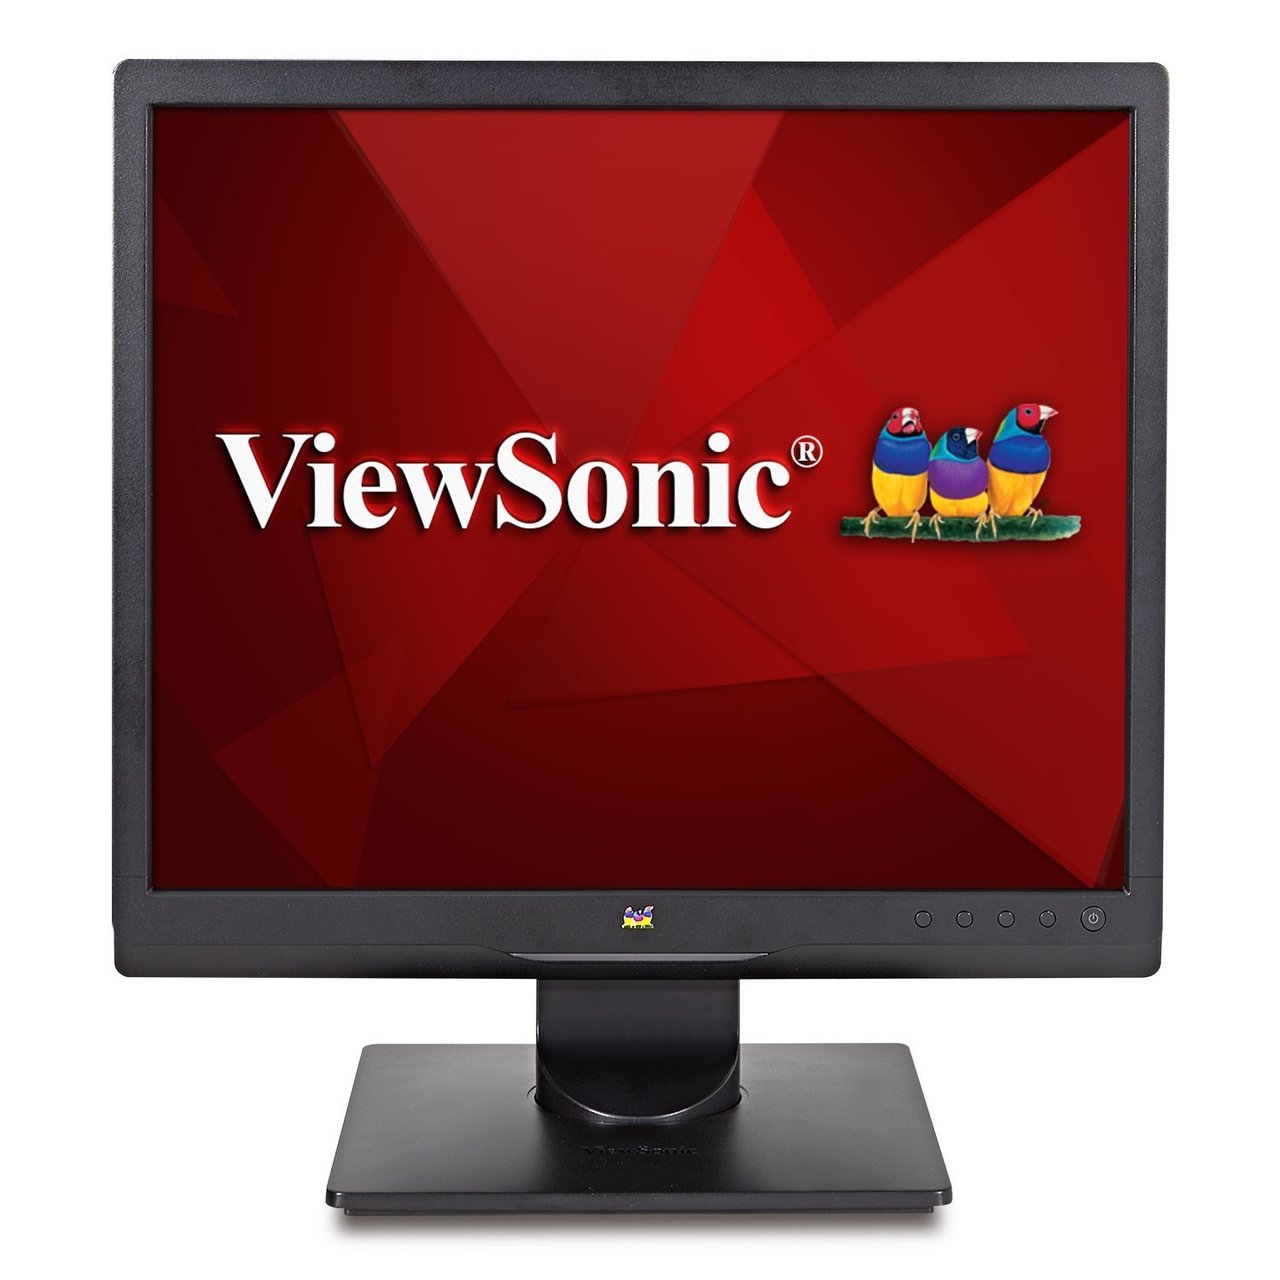 ViewSonic VA708A-R 17" LCD Monitor - C Grade Refurbished